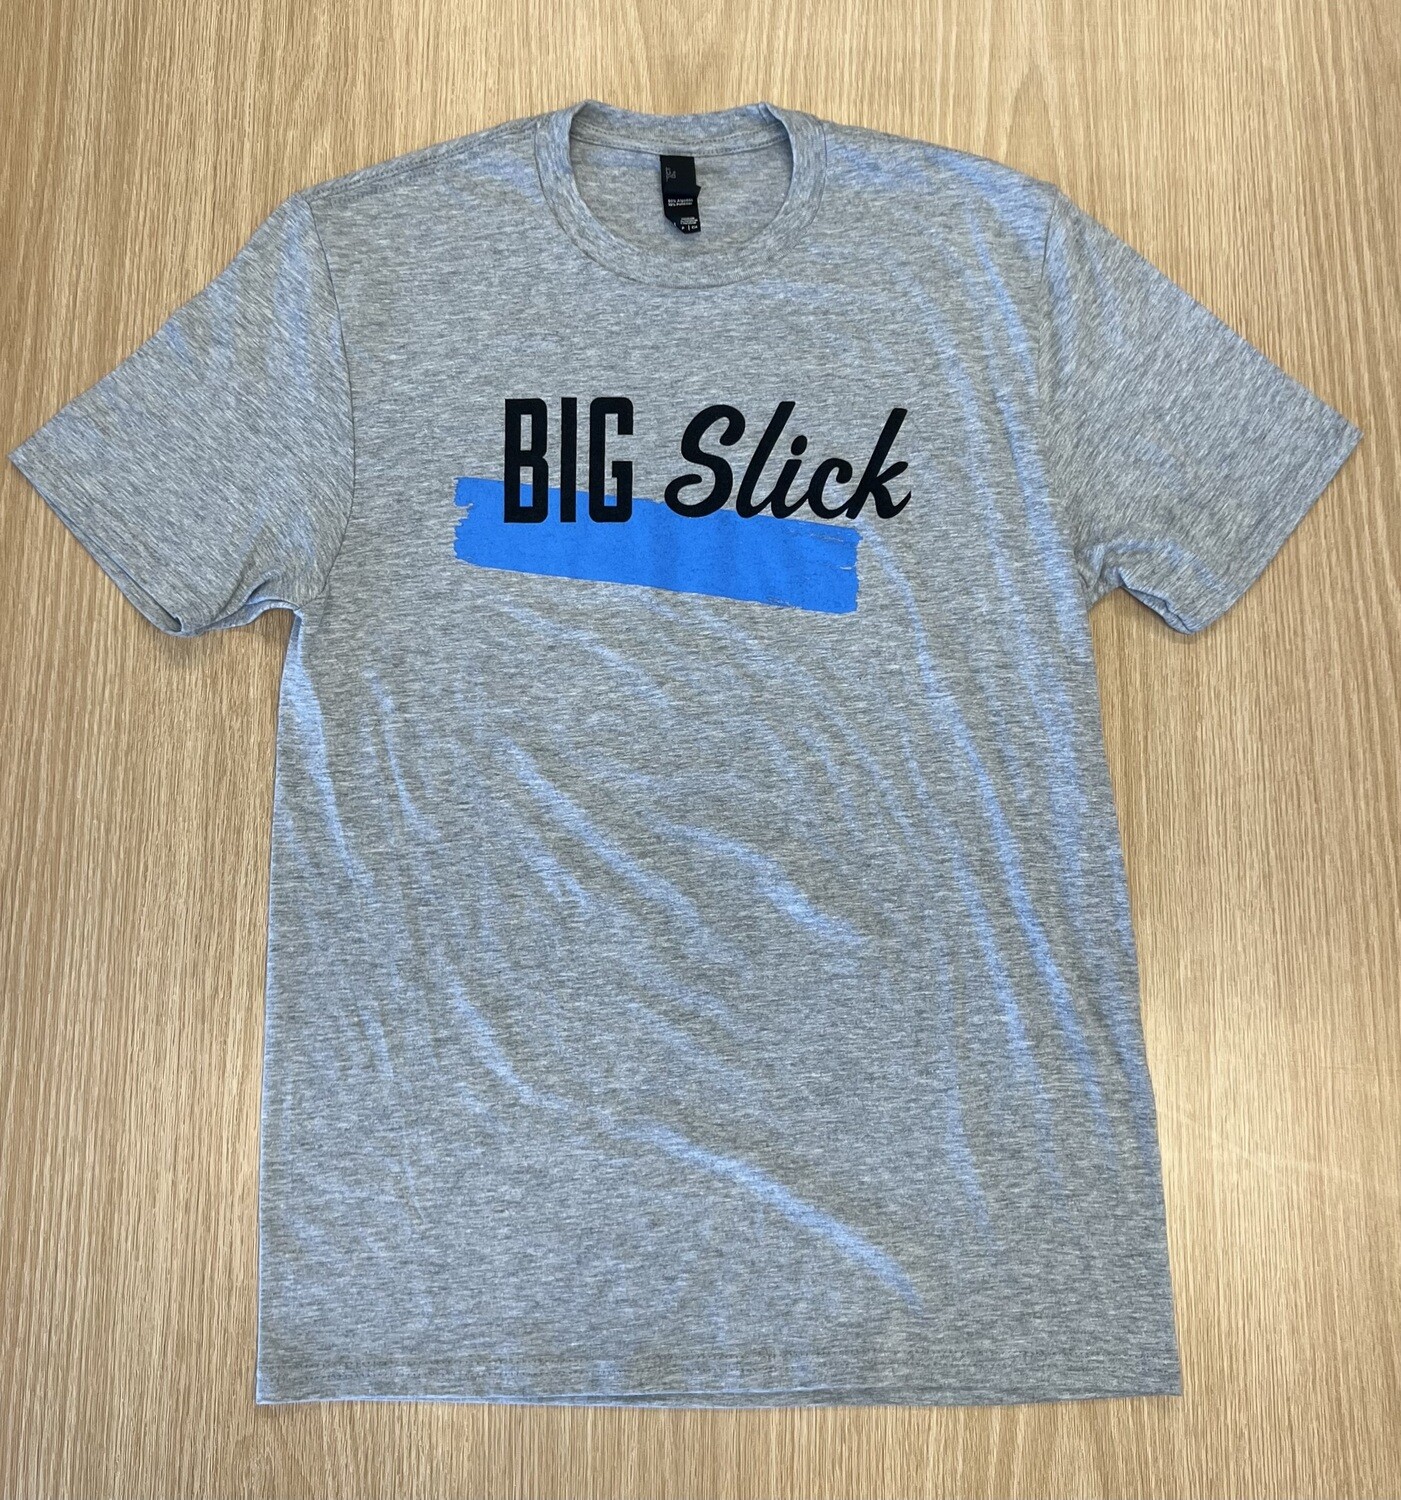 We Tell Slick Jokes T-Shirt